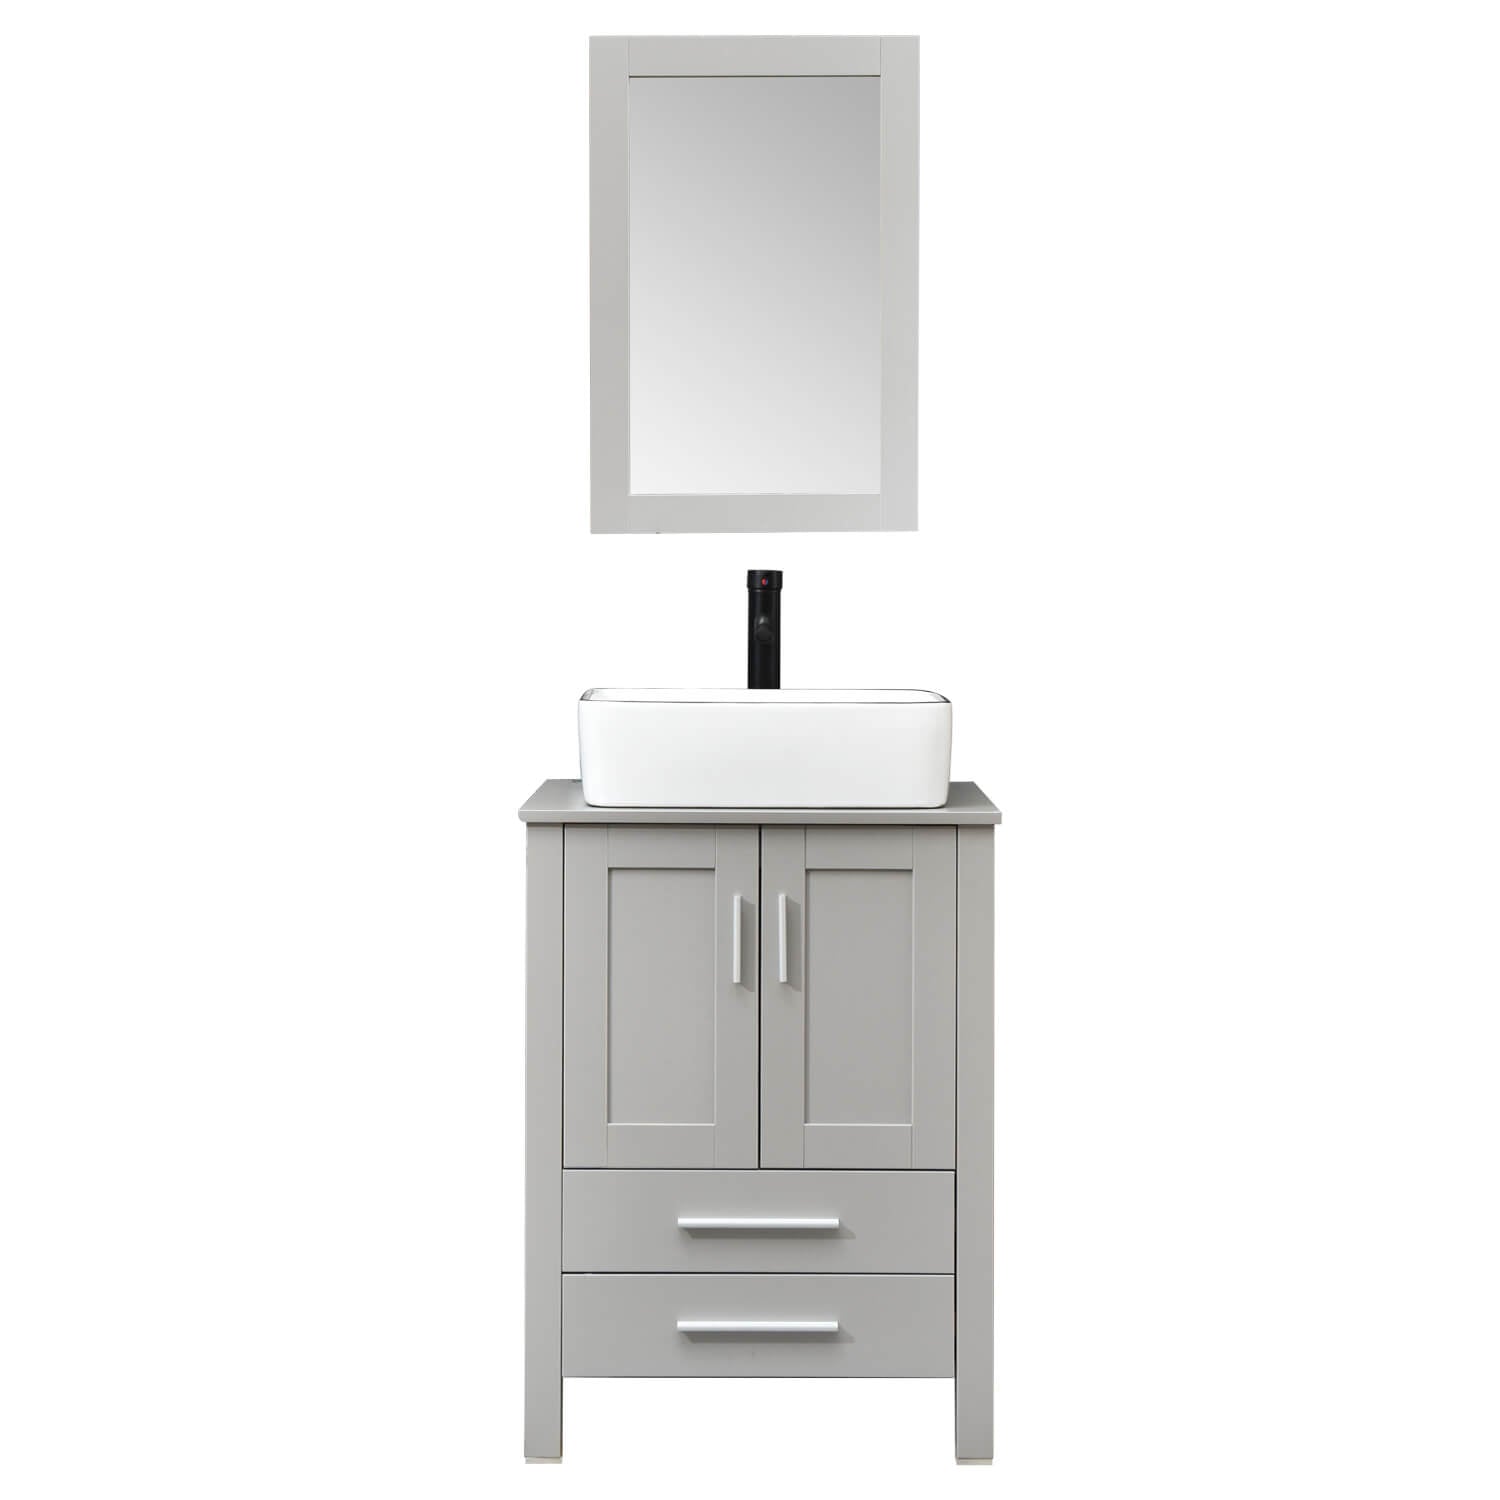 Elecwish gray wood bathroom vanity with white ceramic sink HW1125 in white background